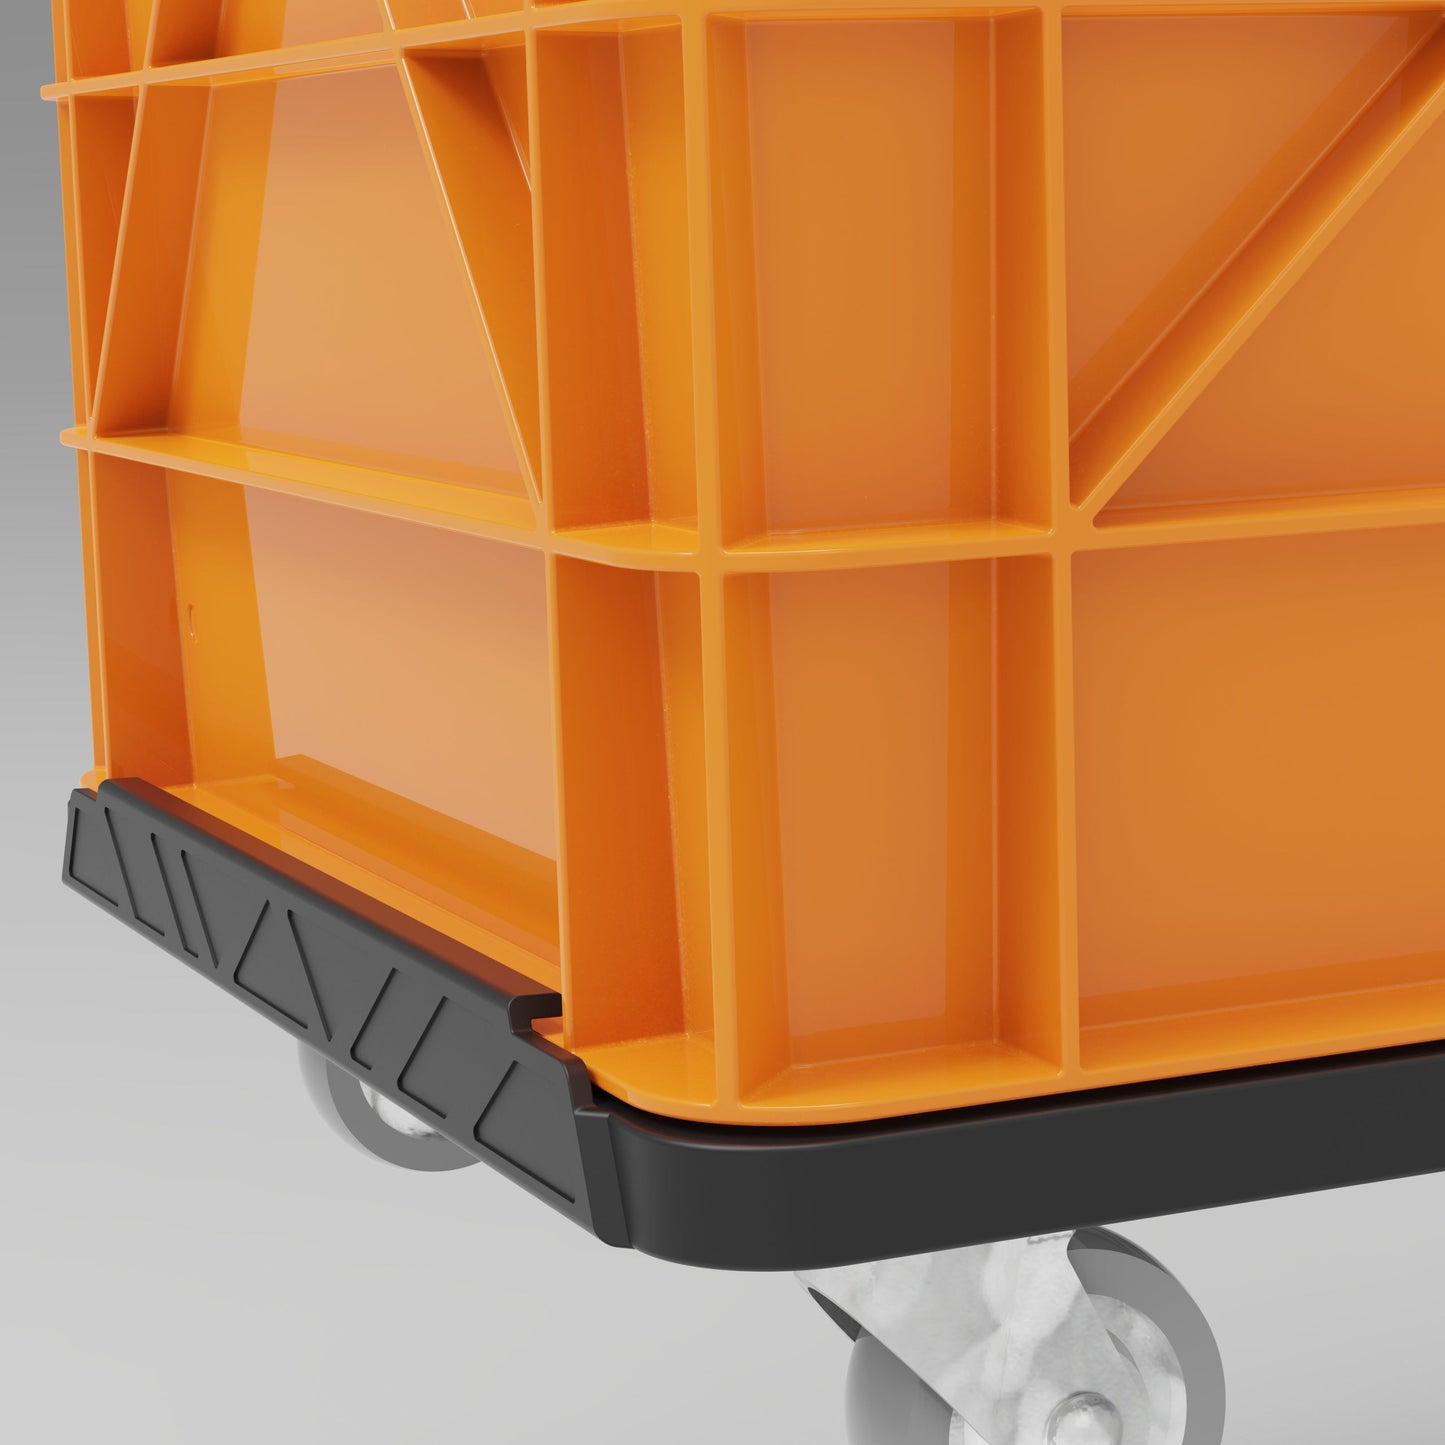 SidioSkate 2.0 Crate Wheels - Pre-Order Now